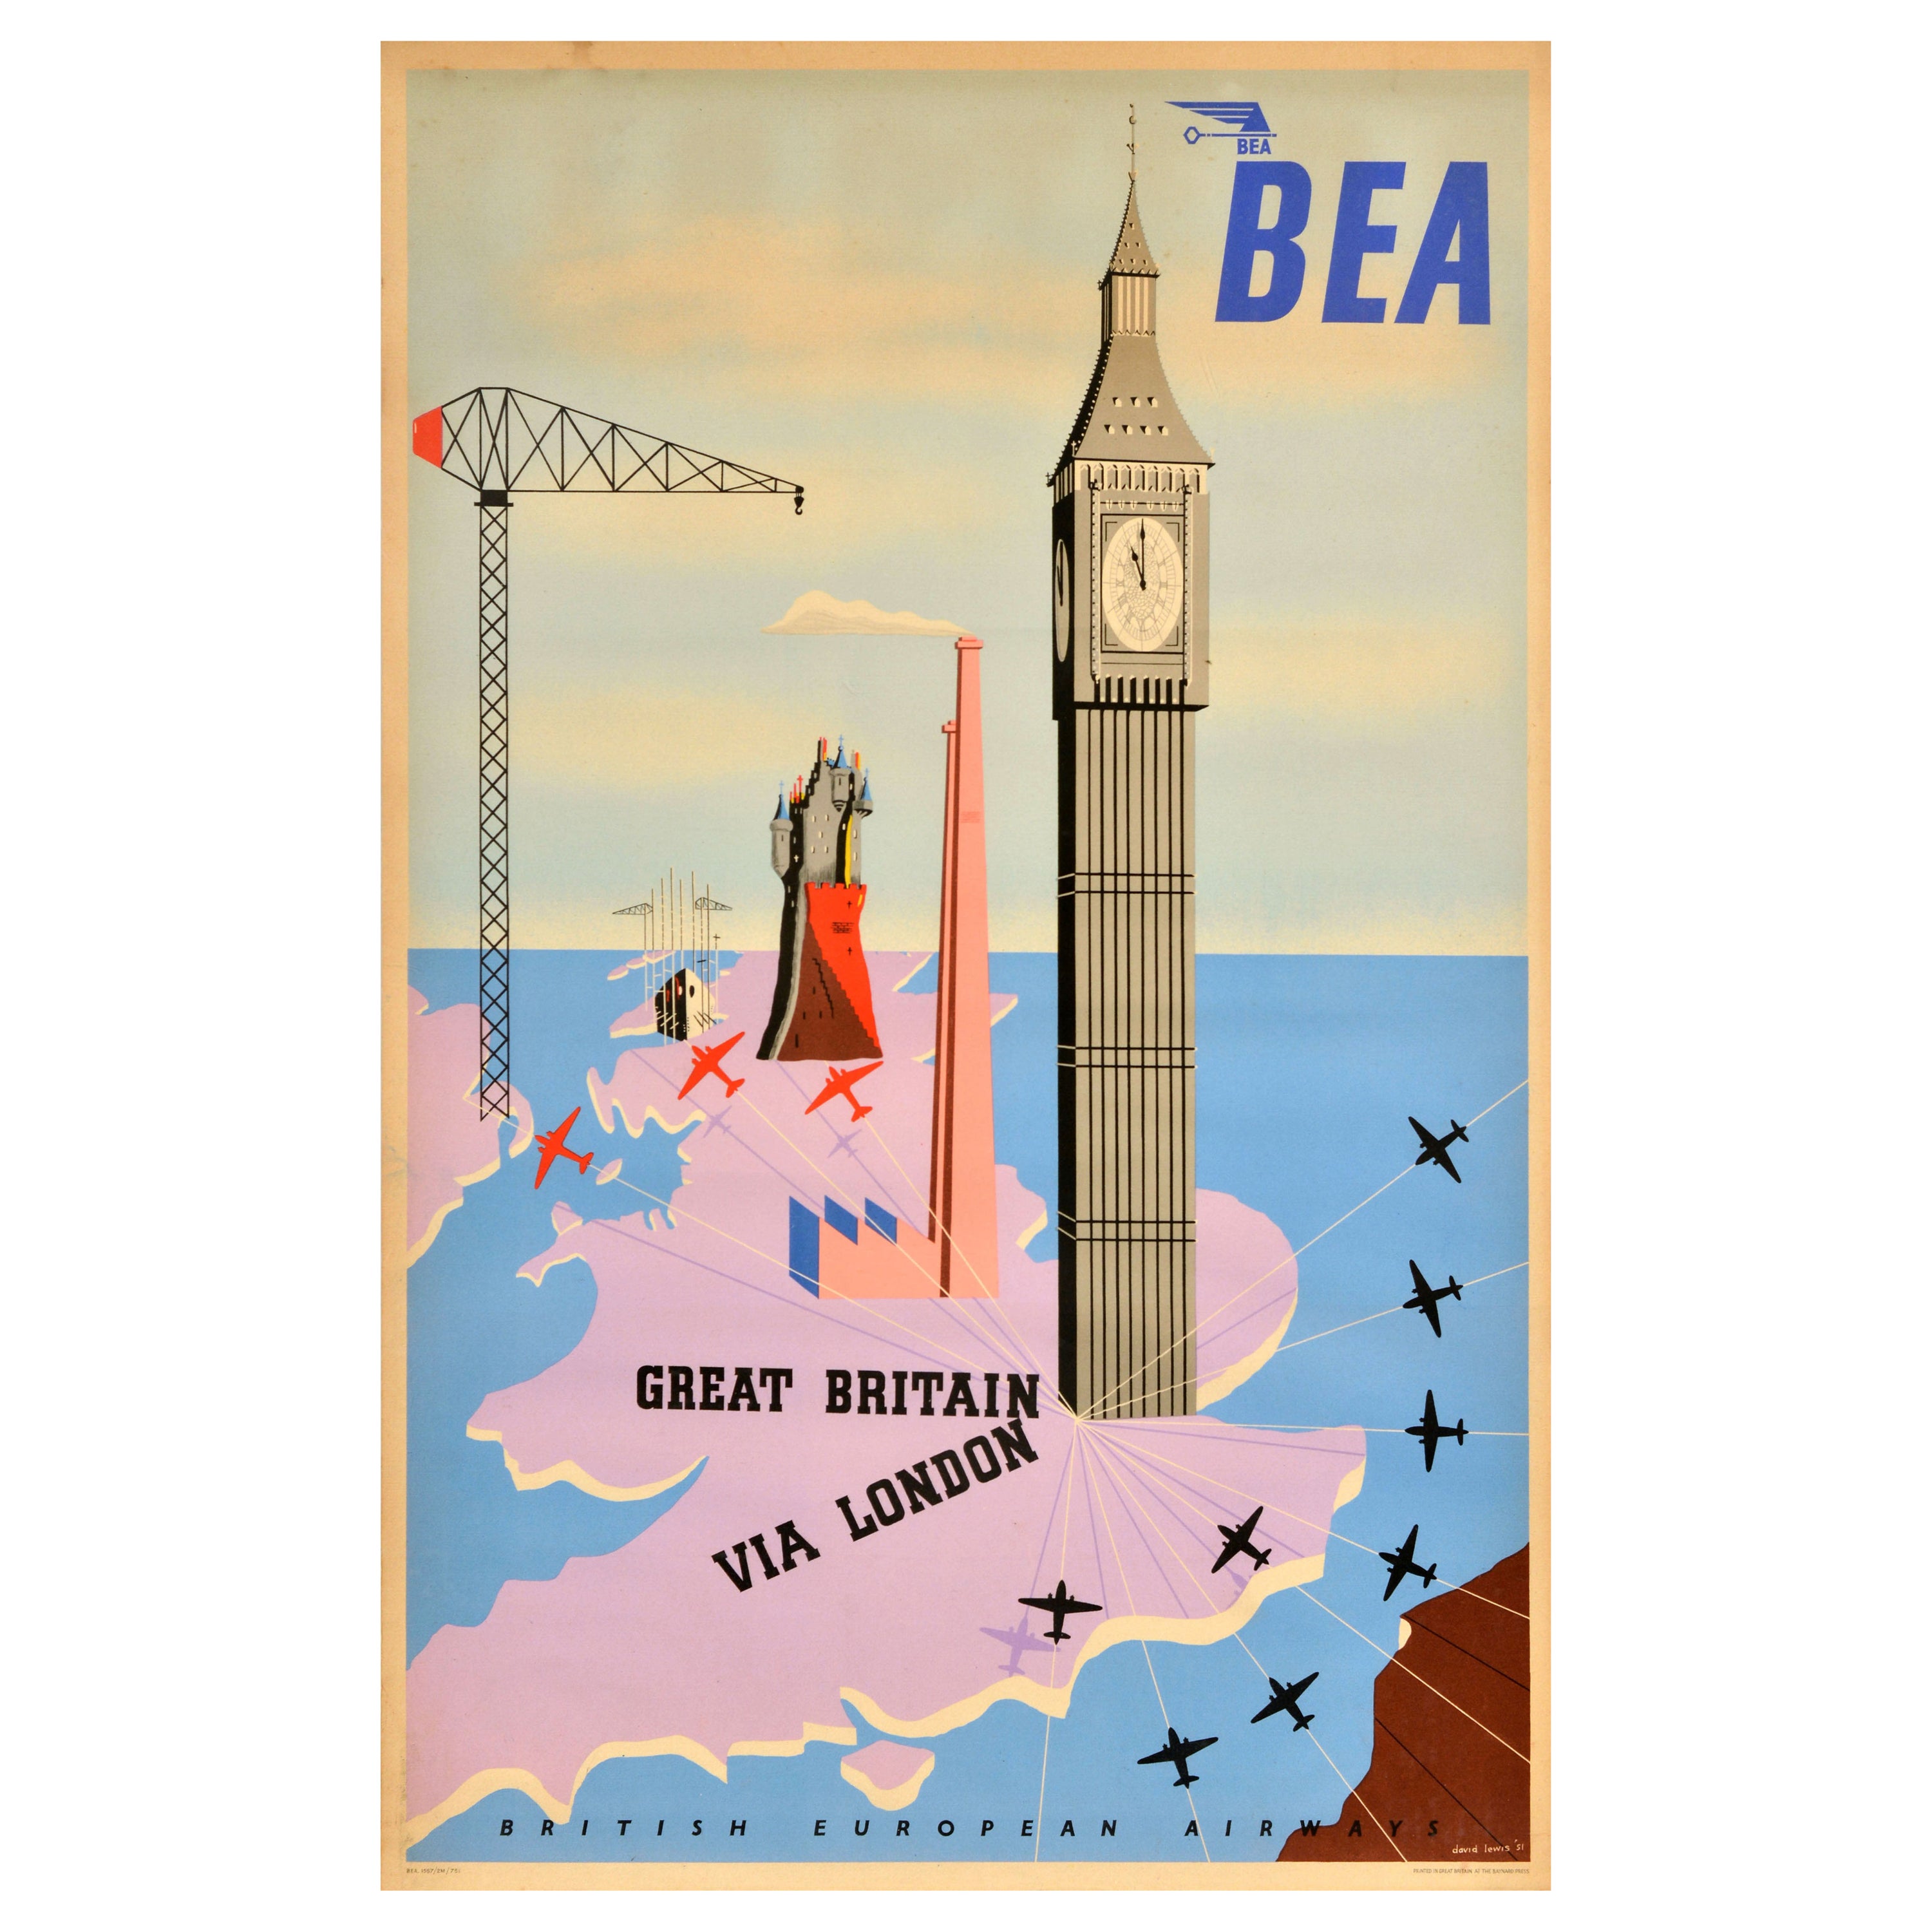 Original Vintage Travel Advertising Poster BEA Great Britain Via London Lewis